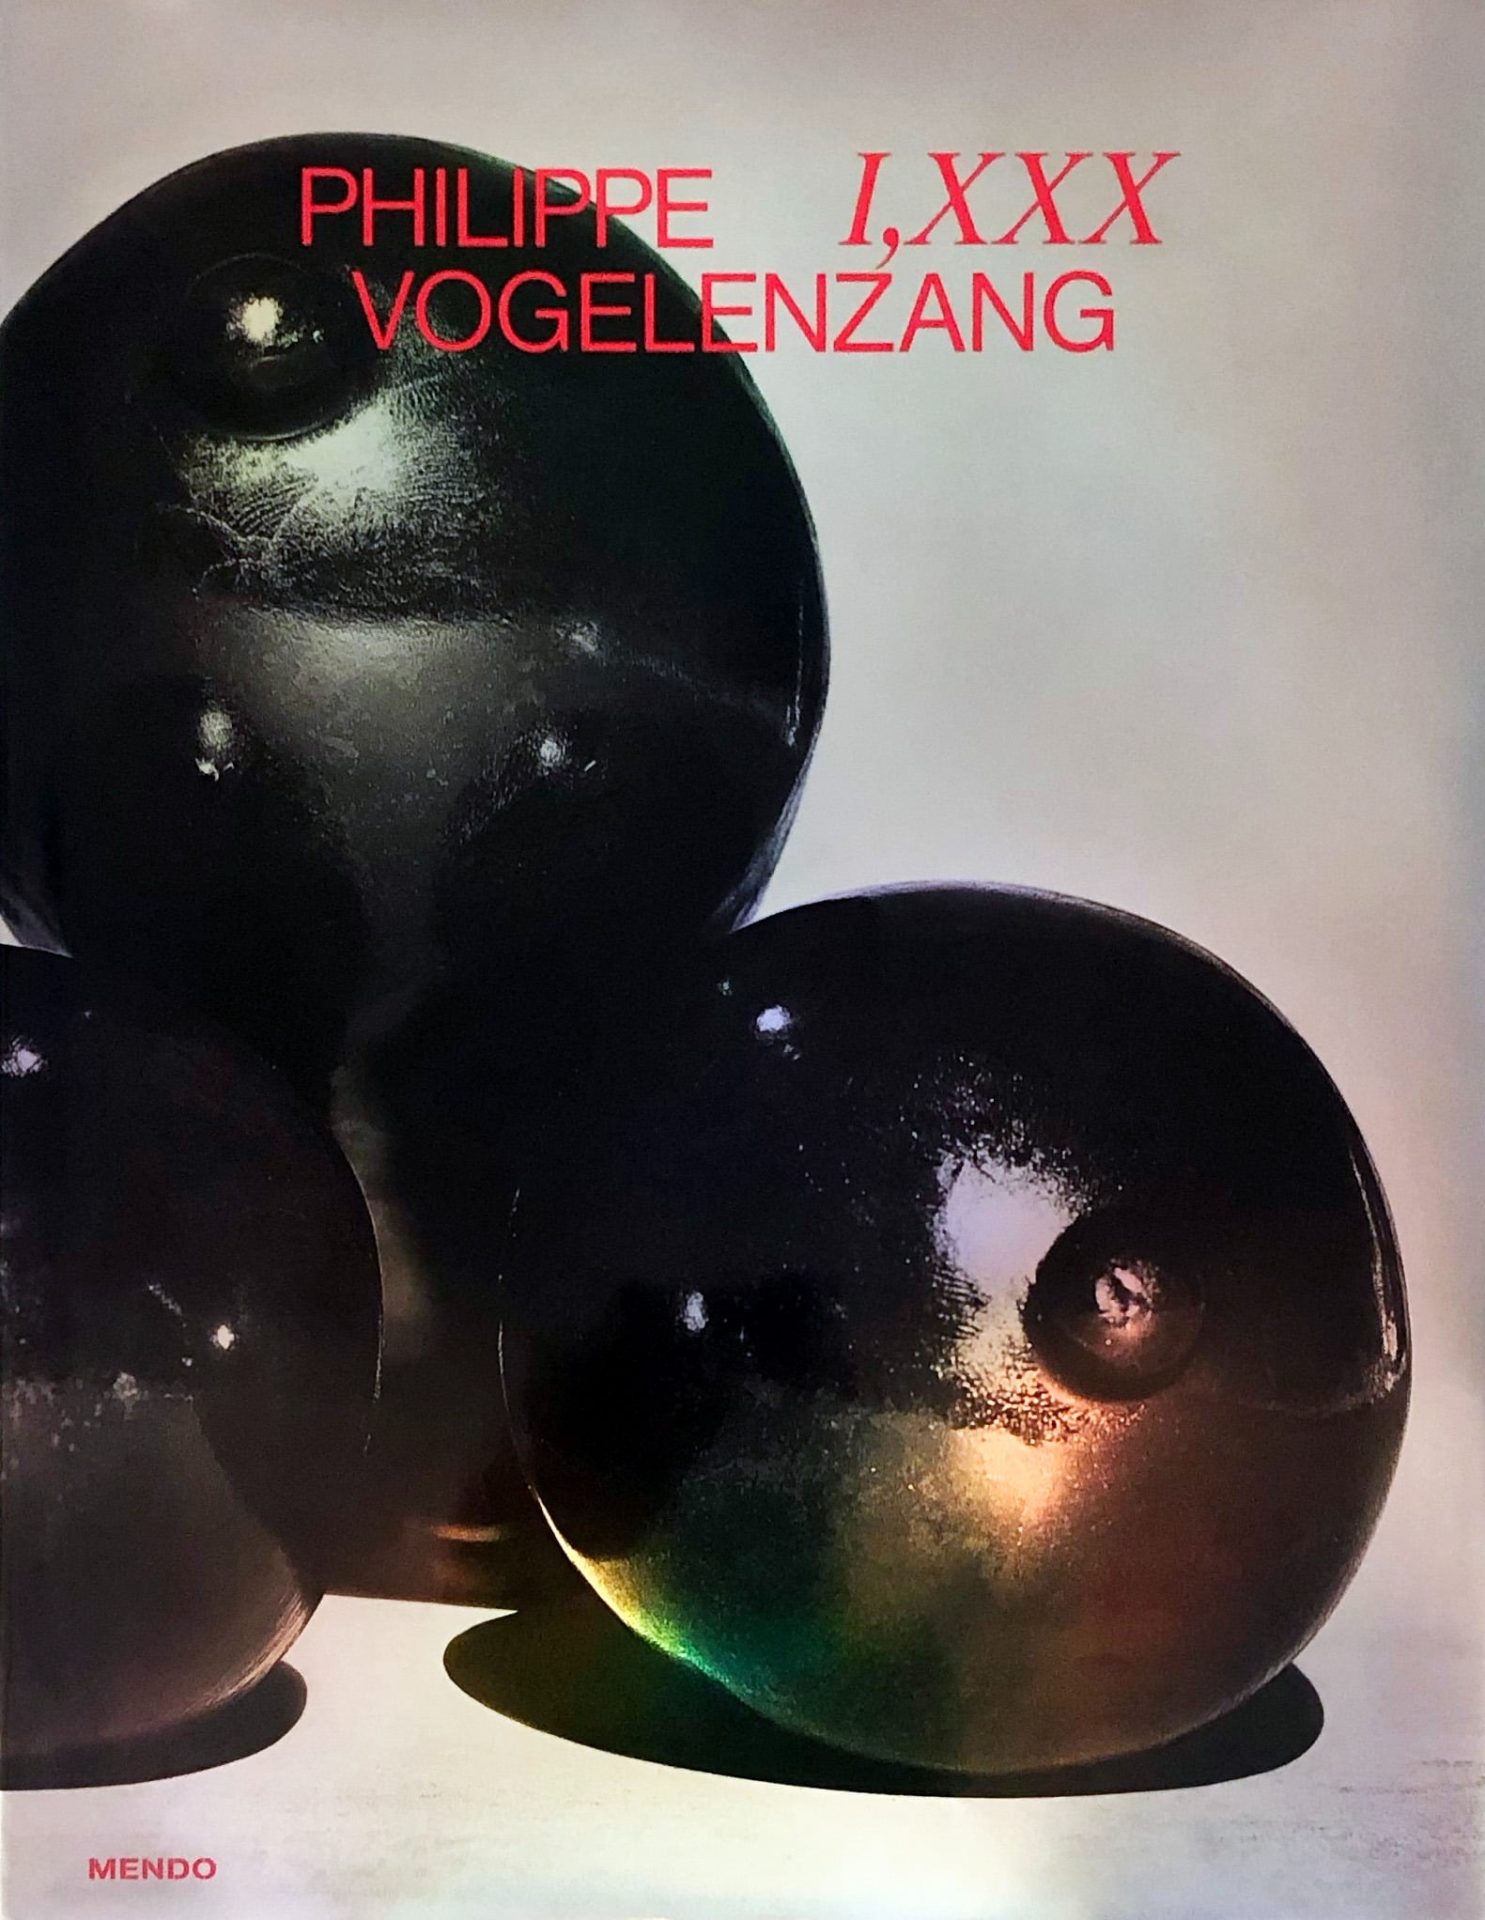 I,XXX: Philippe Vogelenzang